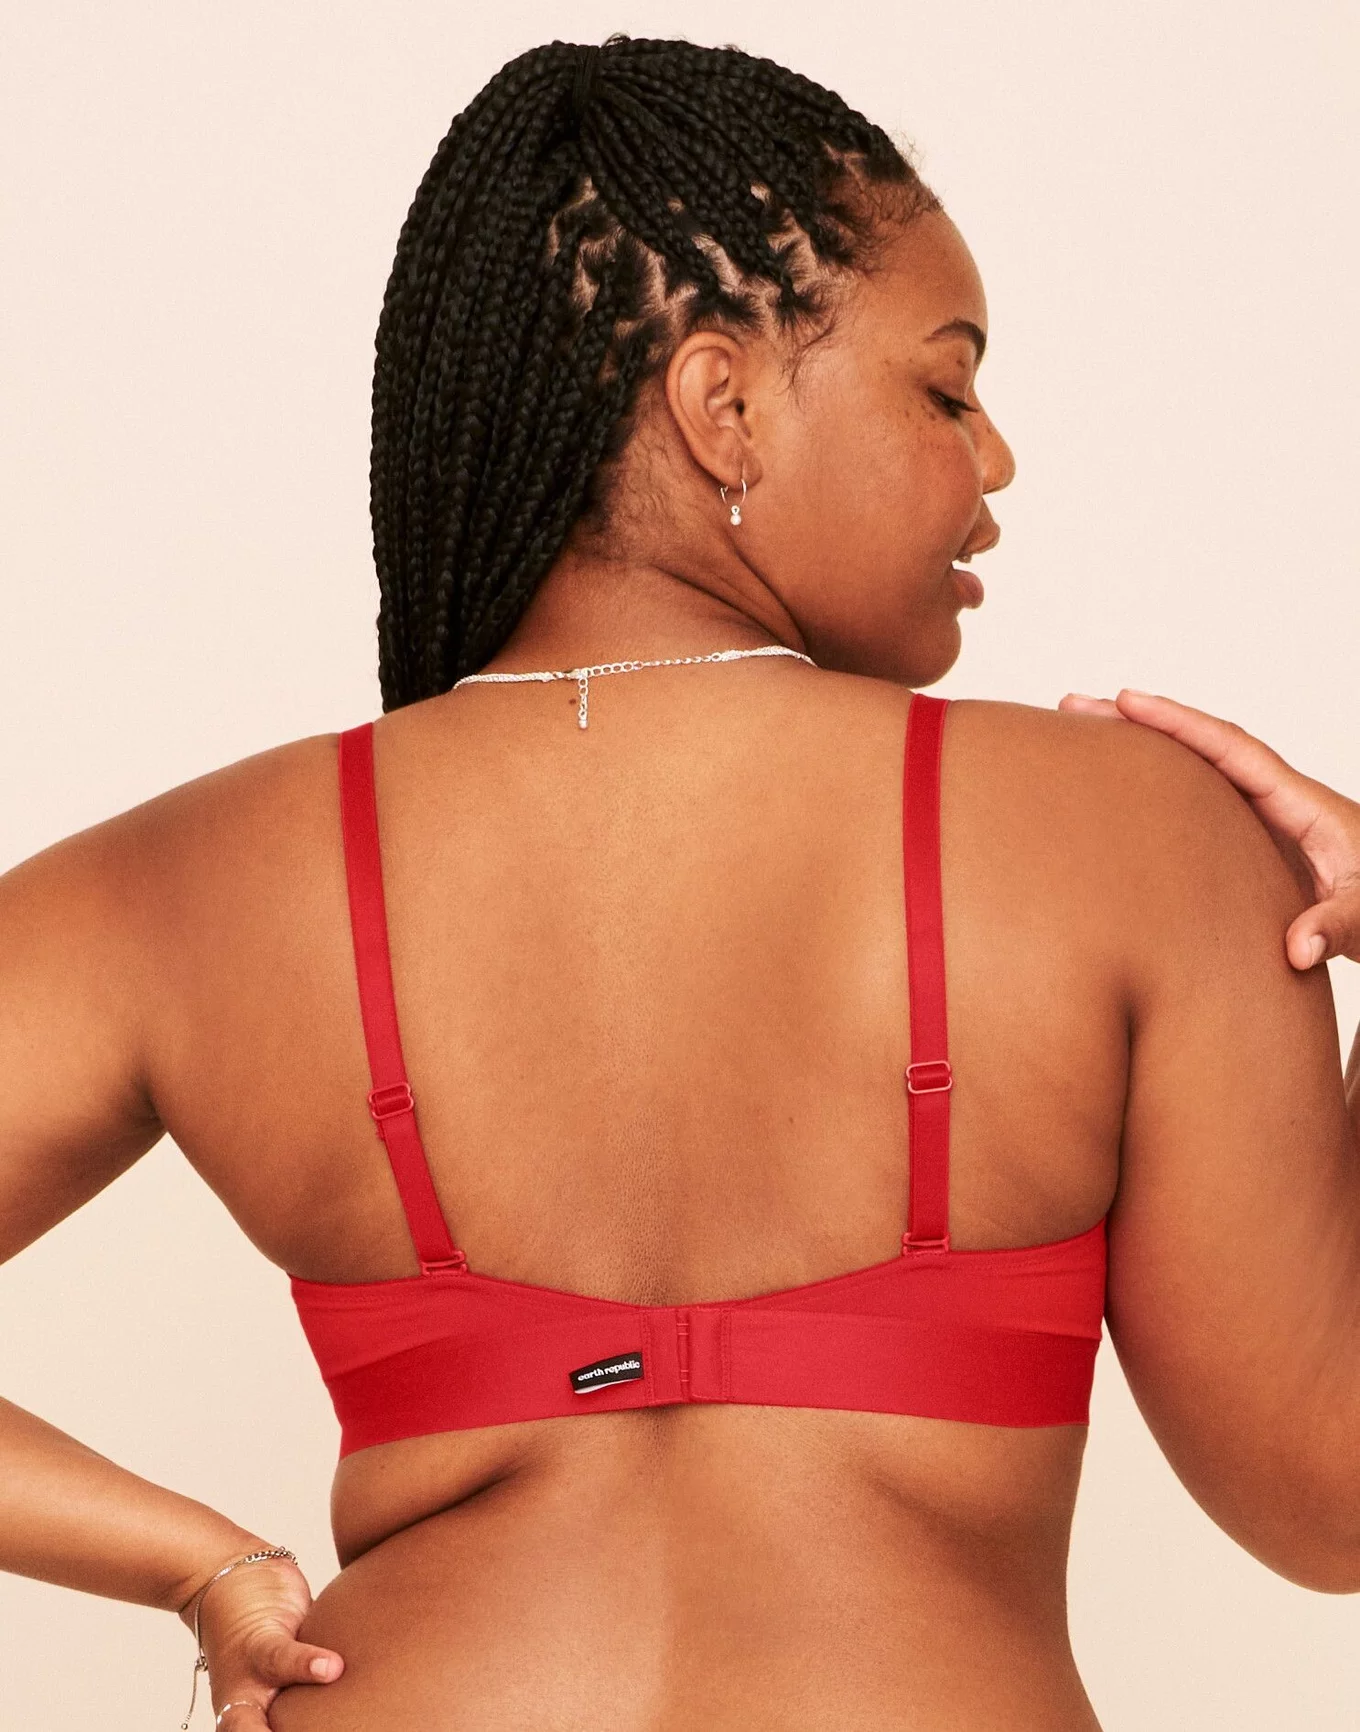 Plus Size Bras for Women Underwire Push-Up Yoga Bra Lace Black 40C